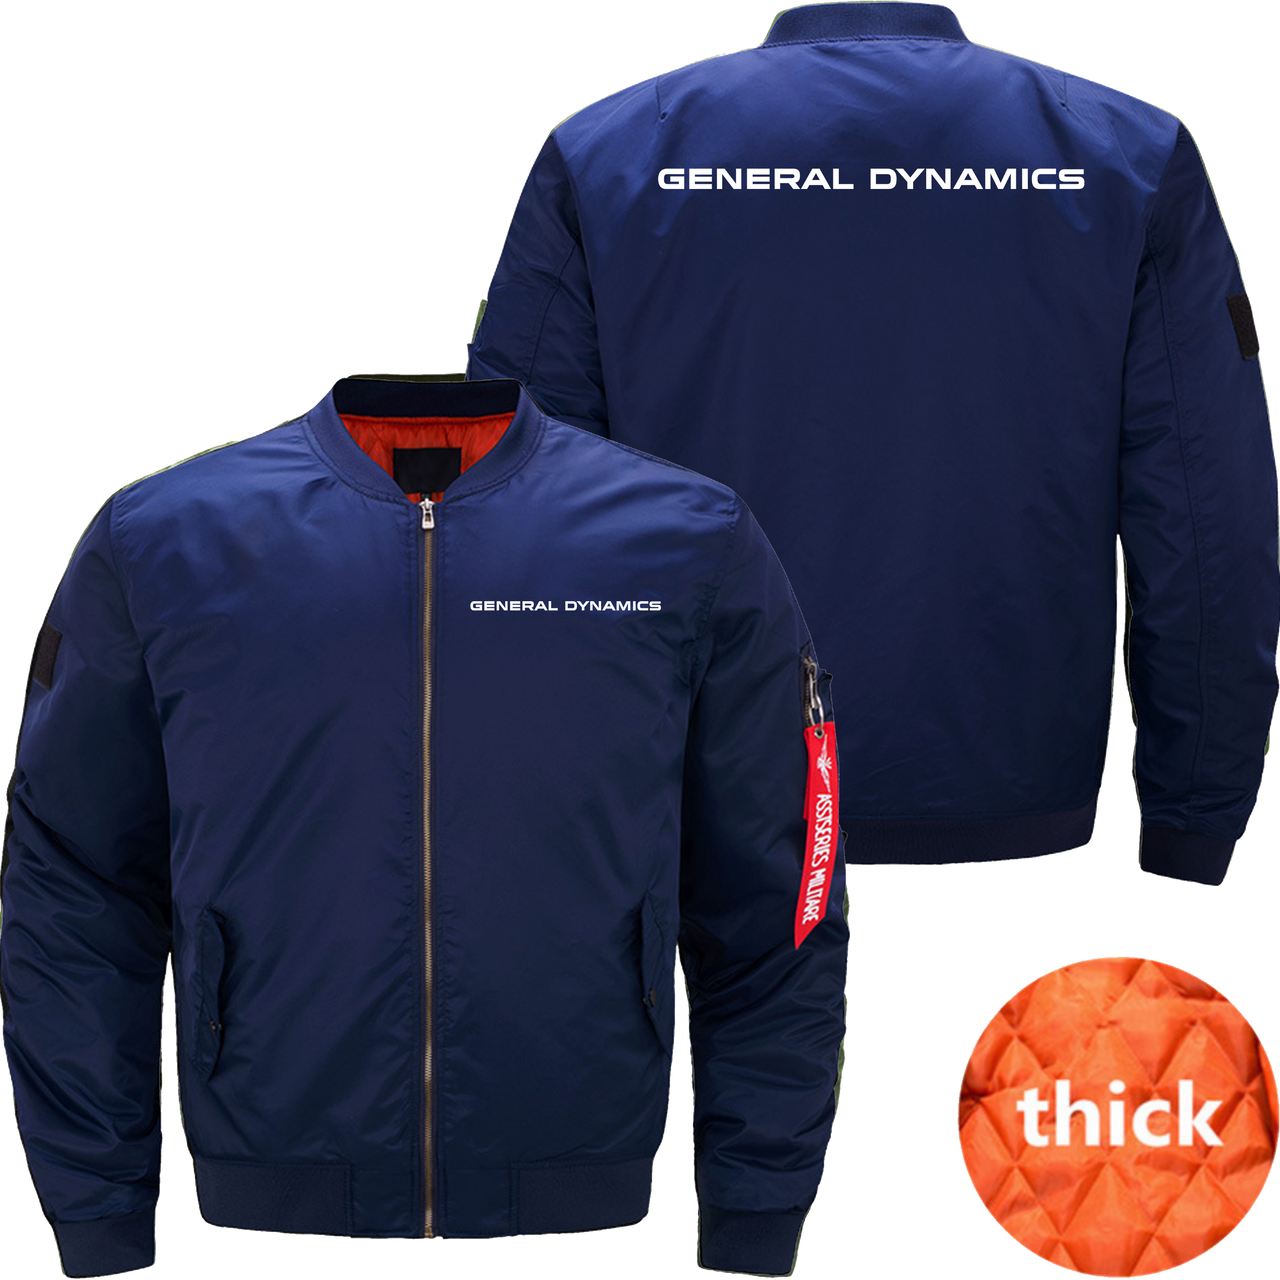 General dynamics Jacket